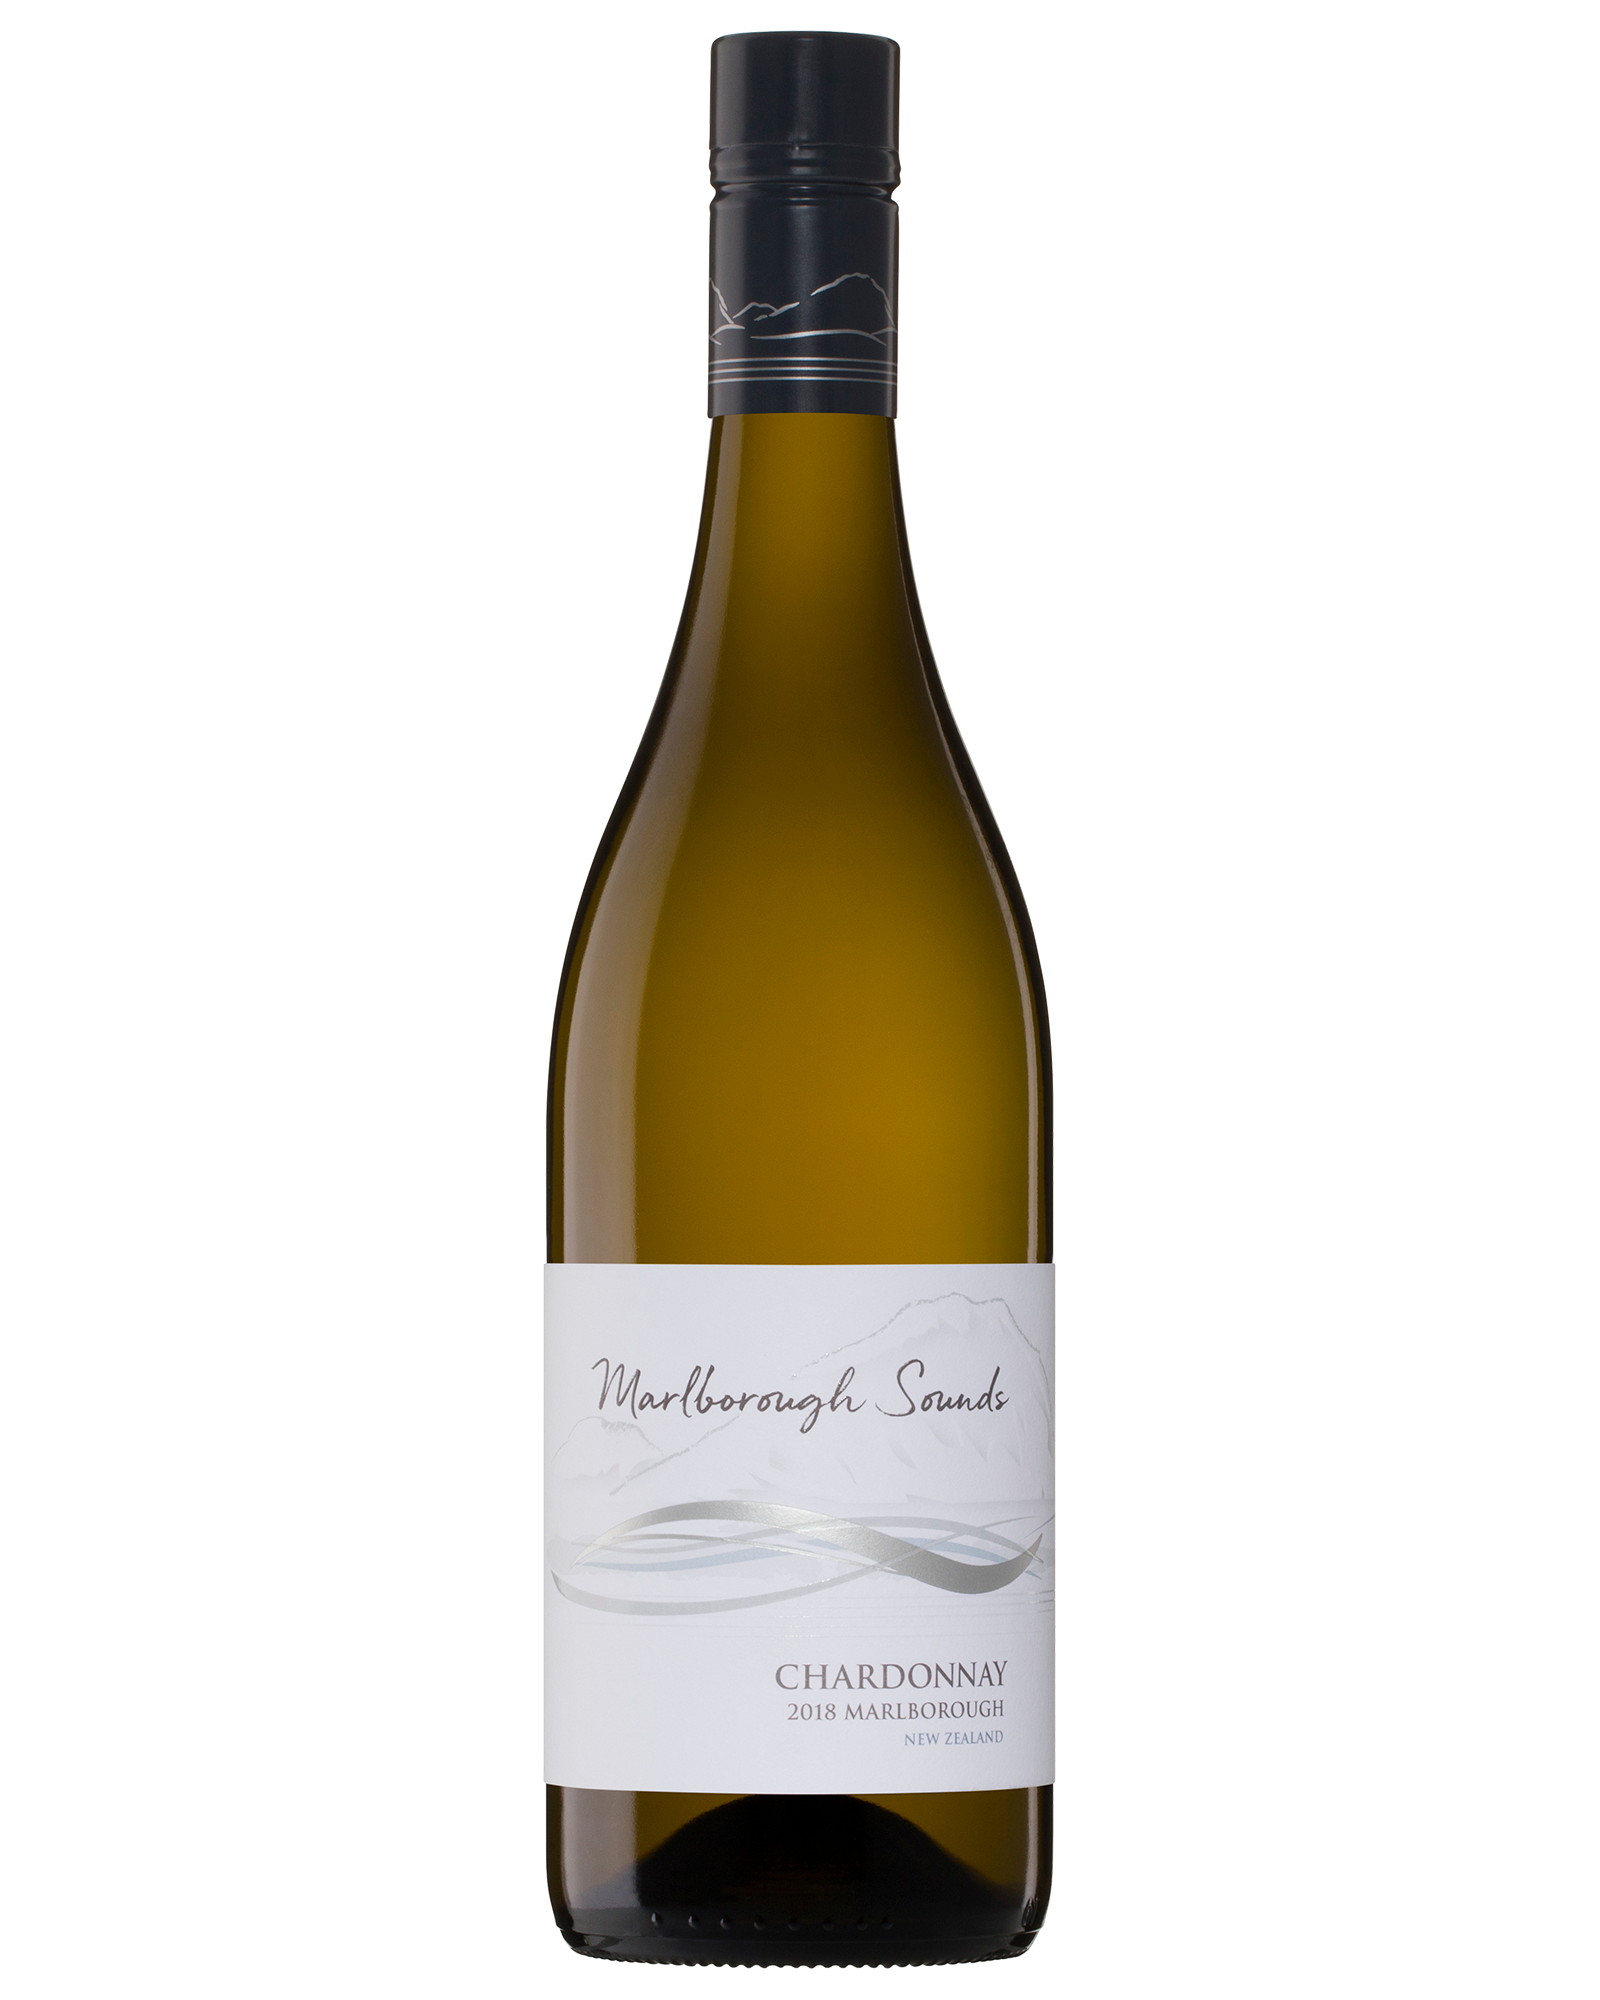 Marlborough Sounds Chardonnay